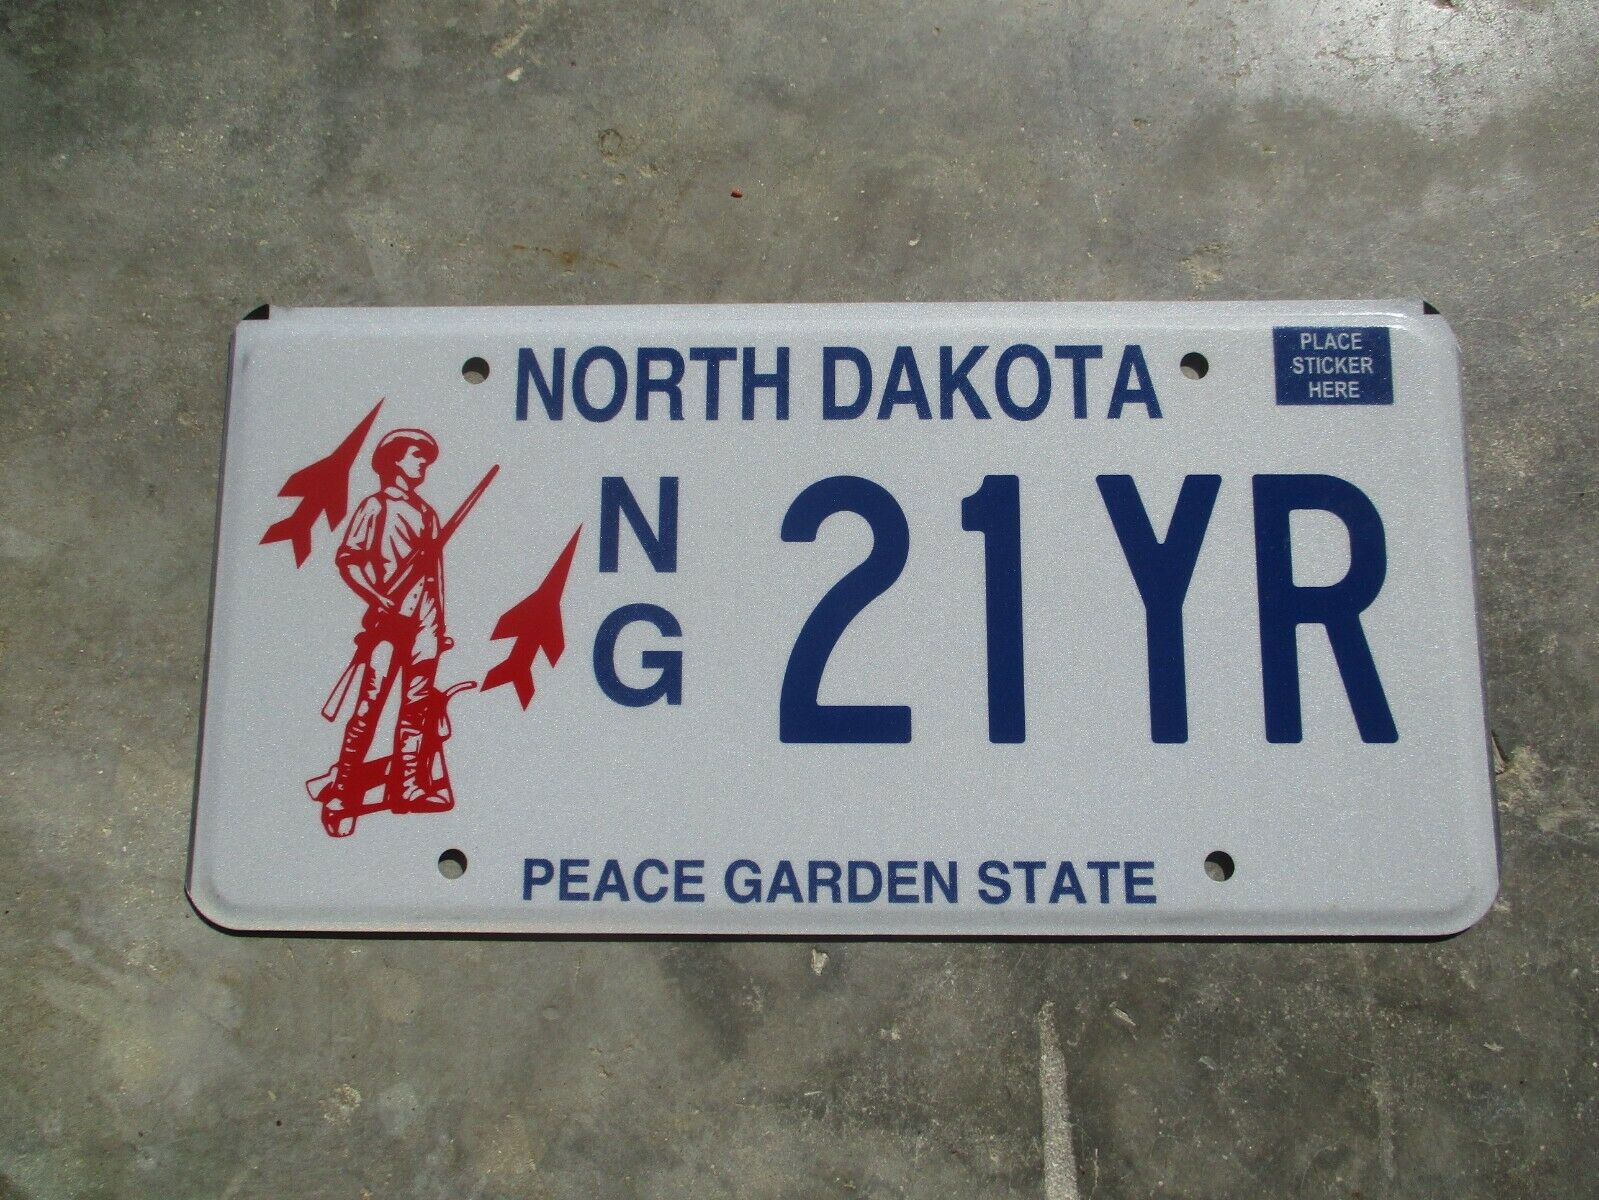 North Dakota National Guard License Plate #  21yr